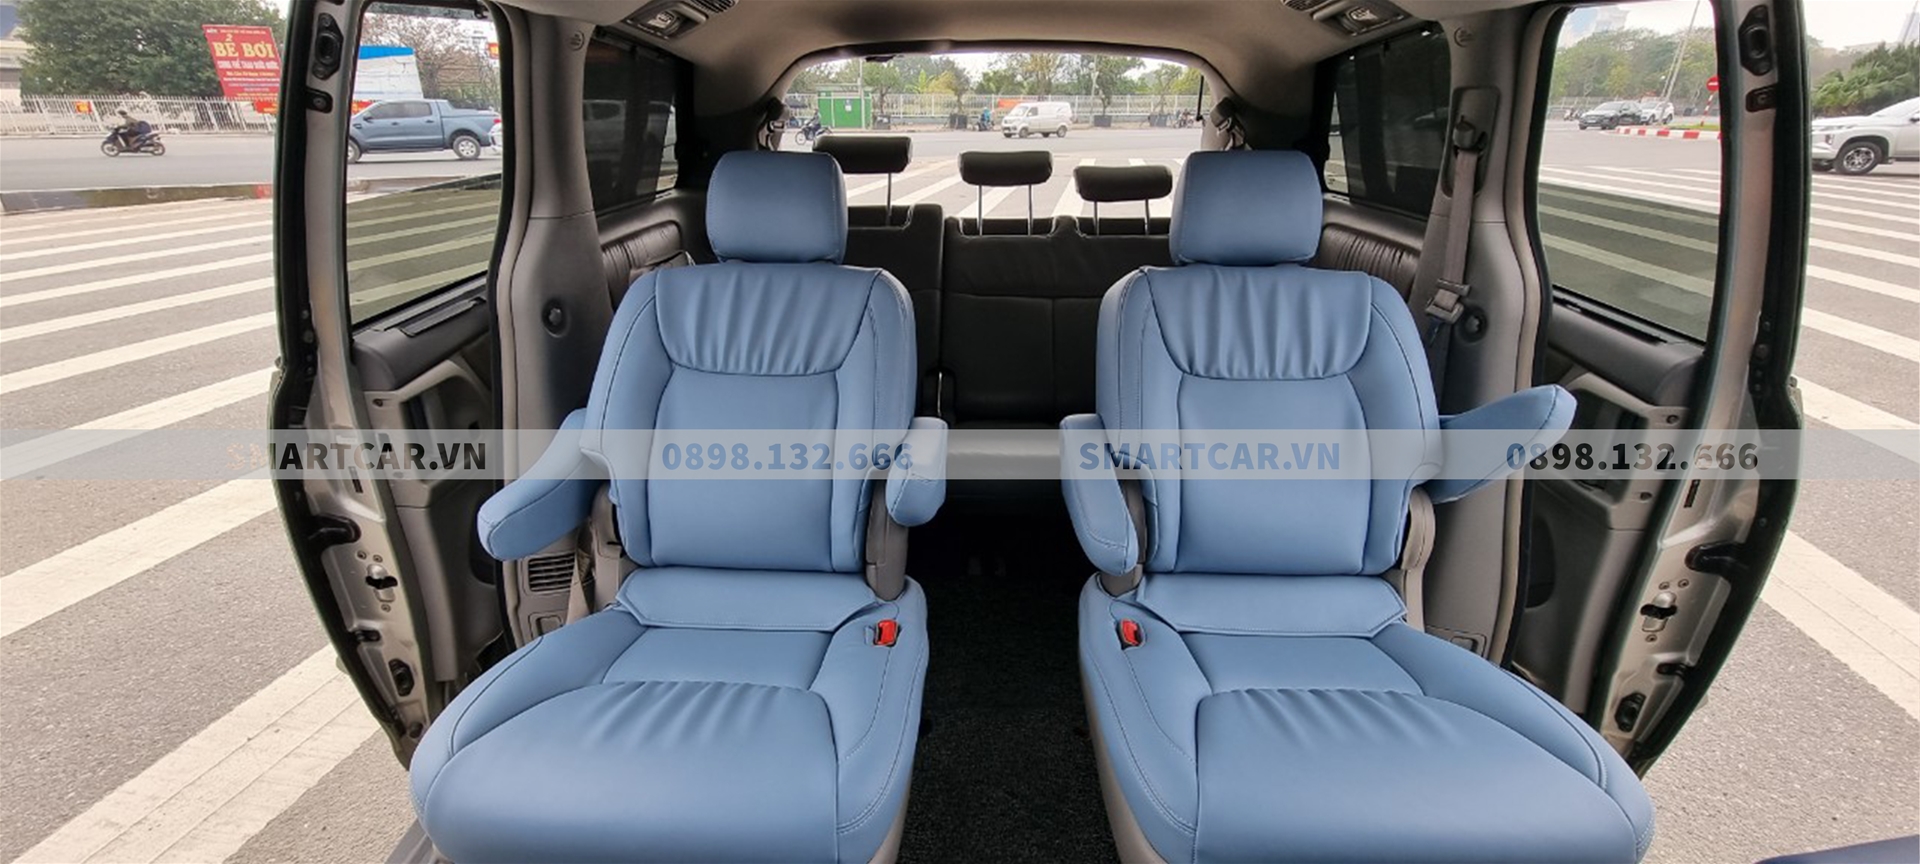 bọc ghế da Toyota Sienna - hình 3